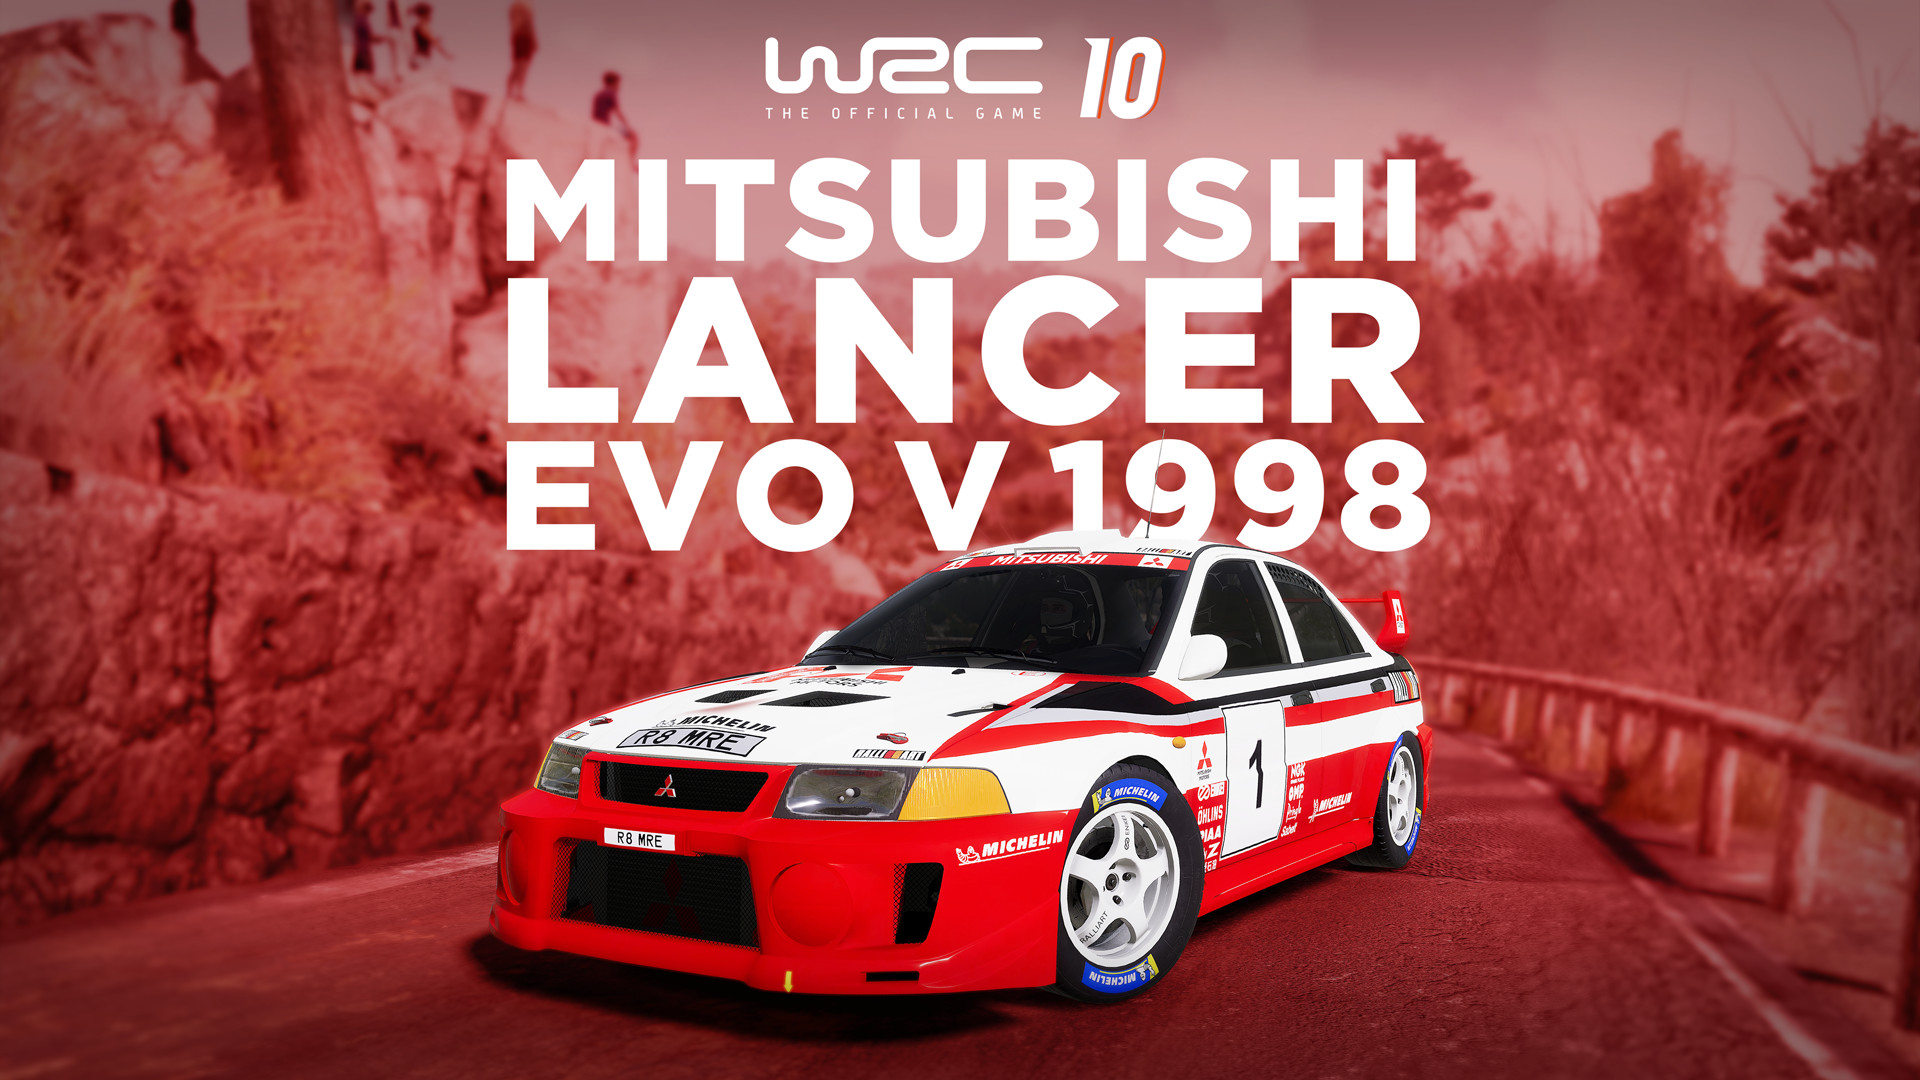 WRC 10 - Mitsubishi Lancer Evo V 1998 DLC Steam CD Key, $2.69